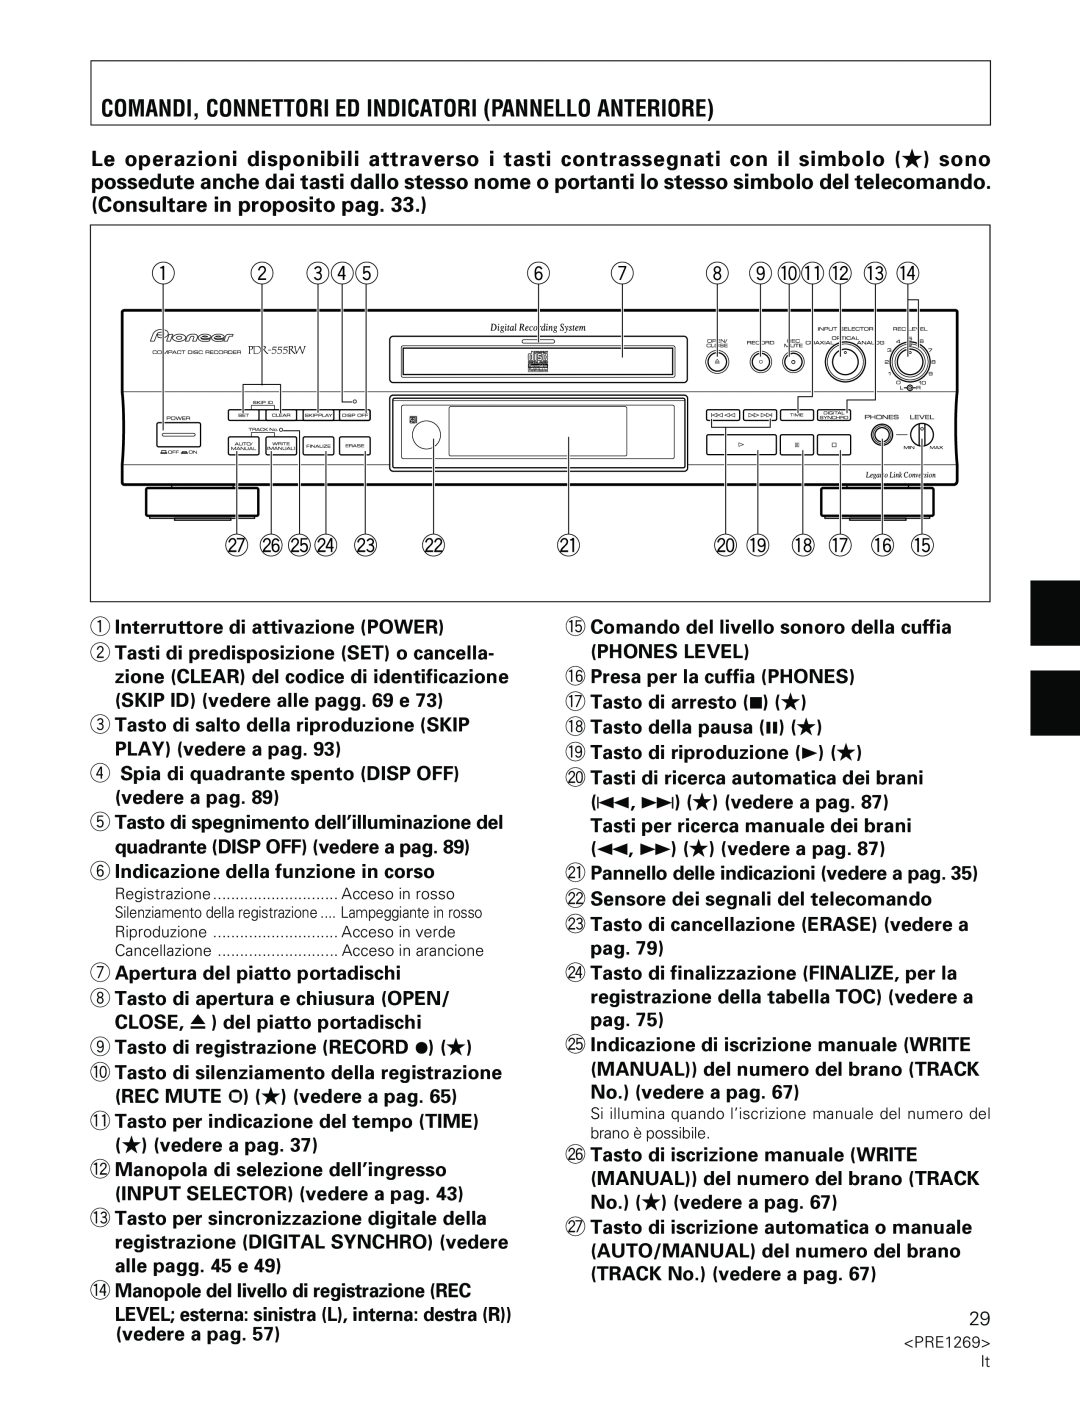 Pioneer PDR-555RW operating instructions 1Interruttore di attivazione POWER 